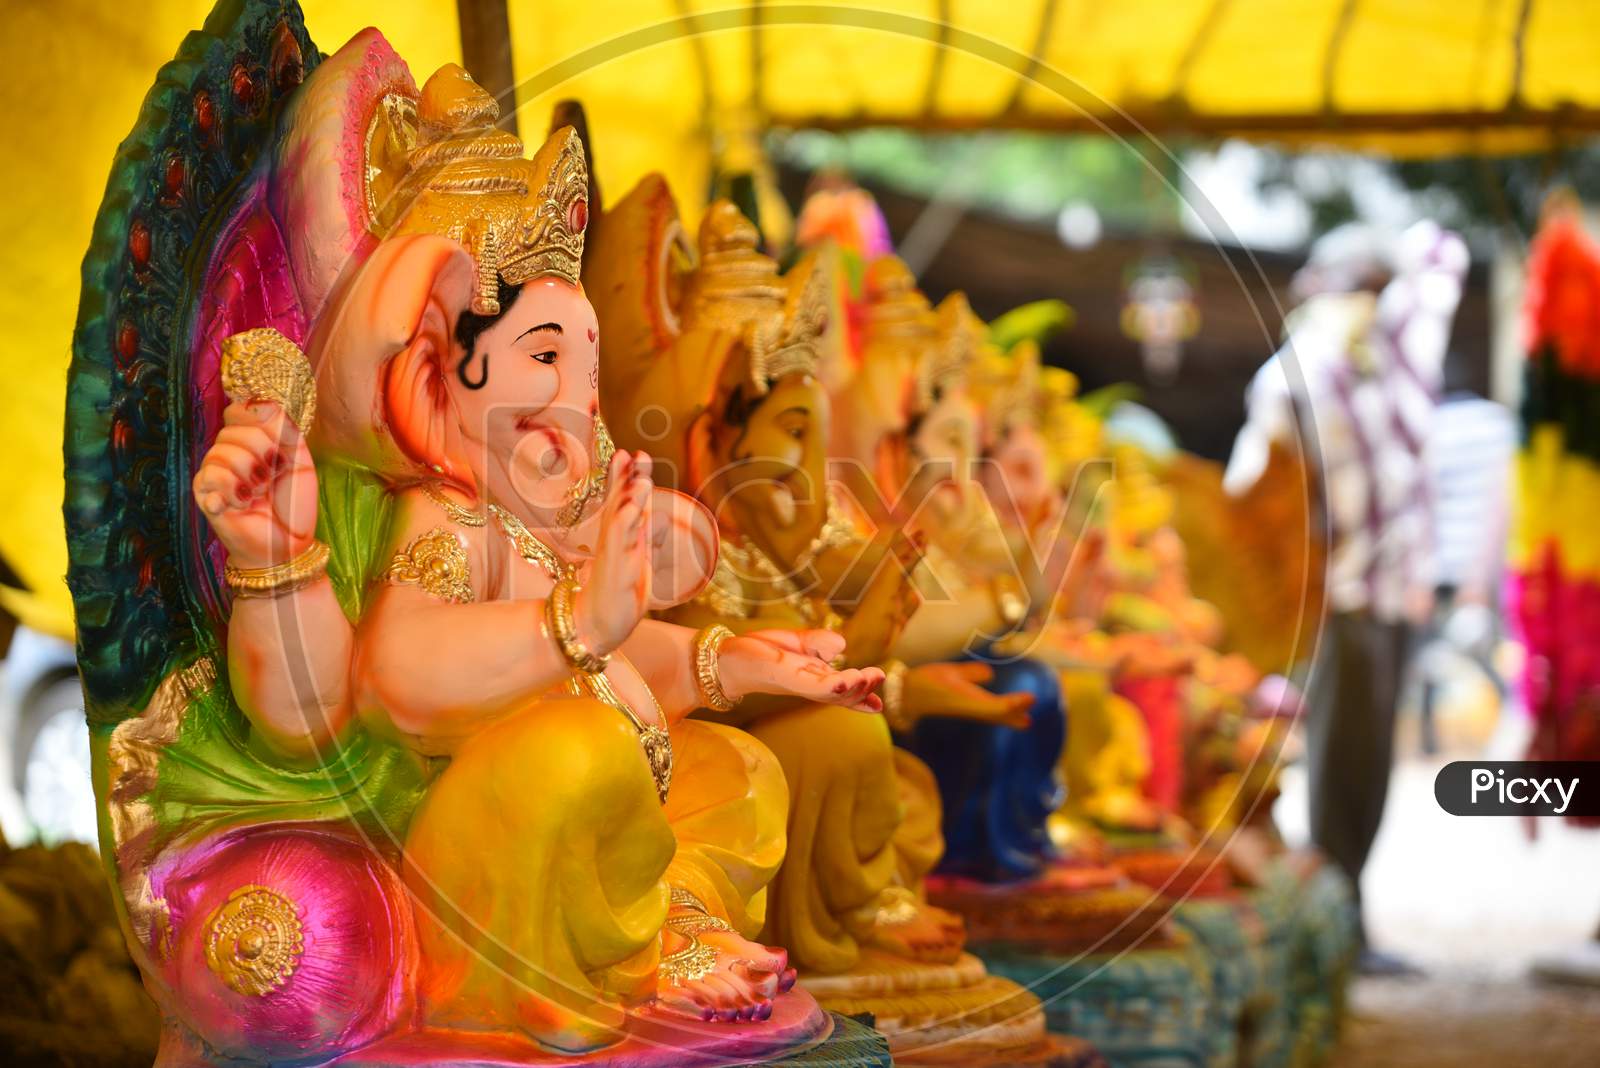 Hindu deity, Lord Ganesh Idols put up for sale ahead of Ganesh Chaturthi/ vinayaka chavithi festival in Hyderabad, August 21,2020.